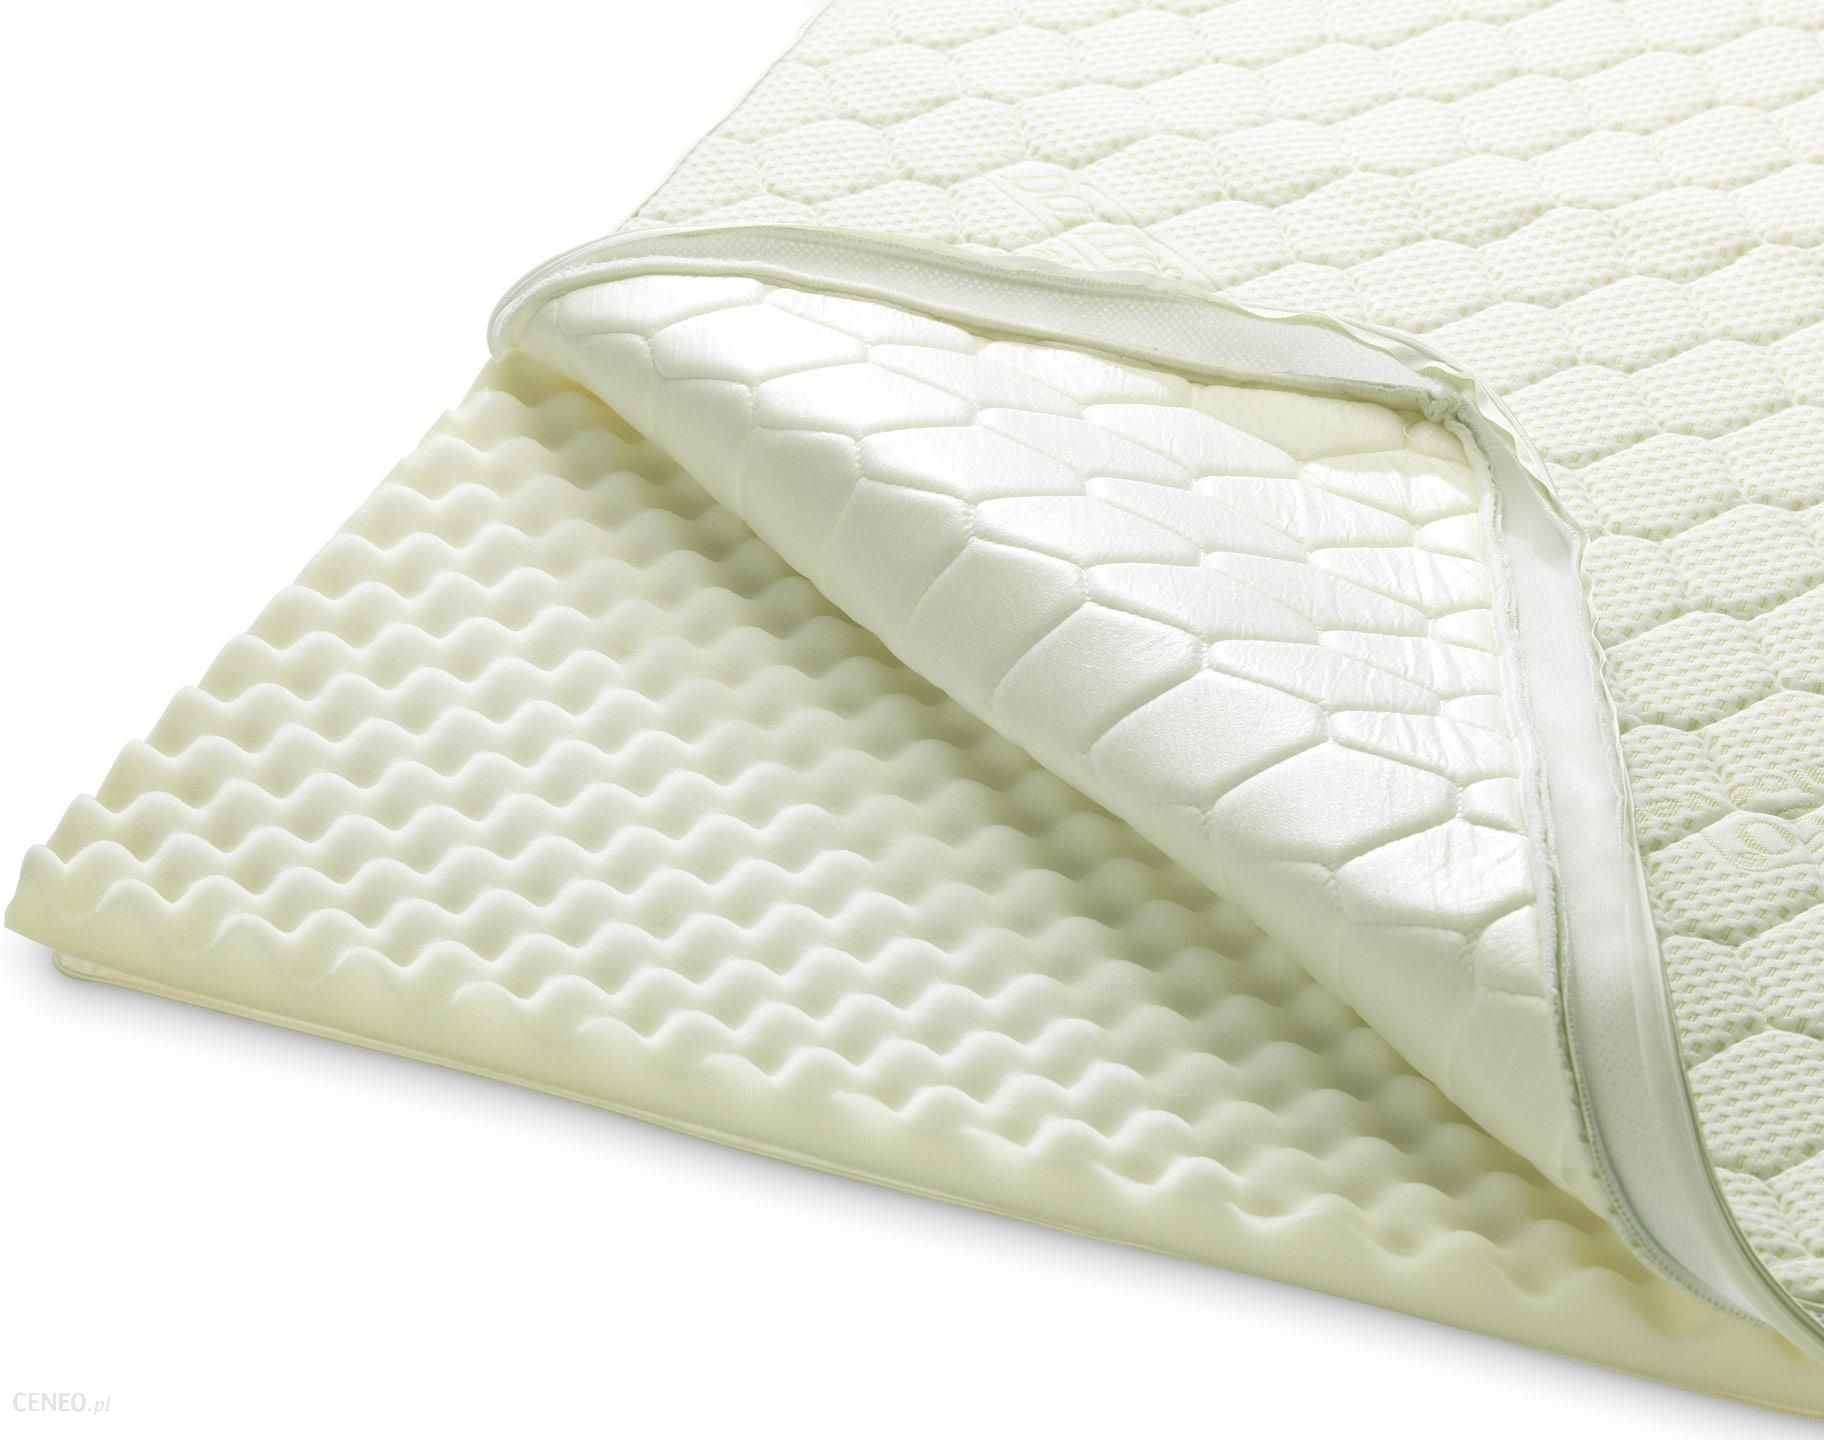 dormeo aloe vera memory foam mattress reviews